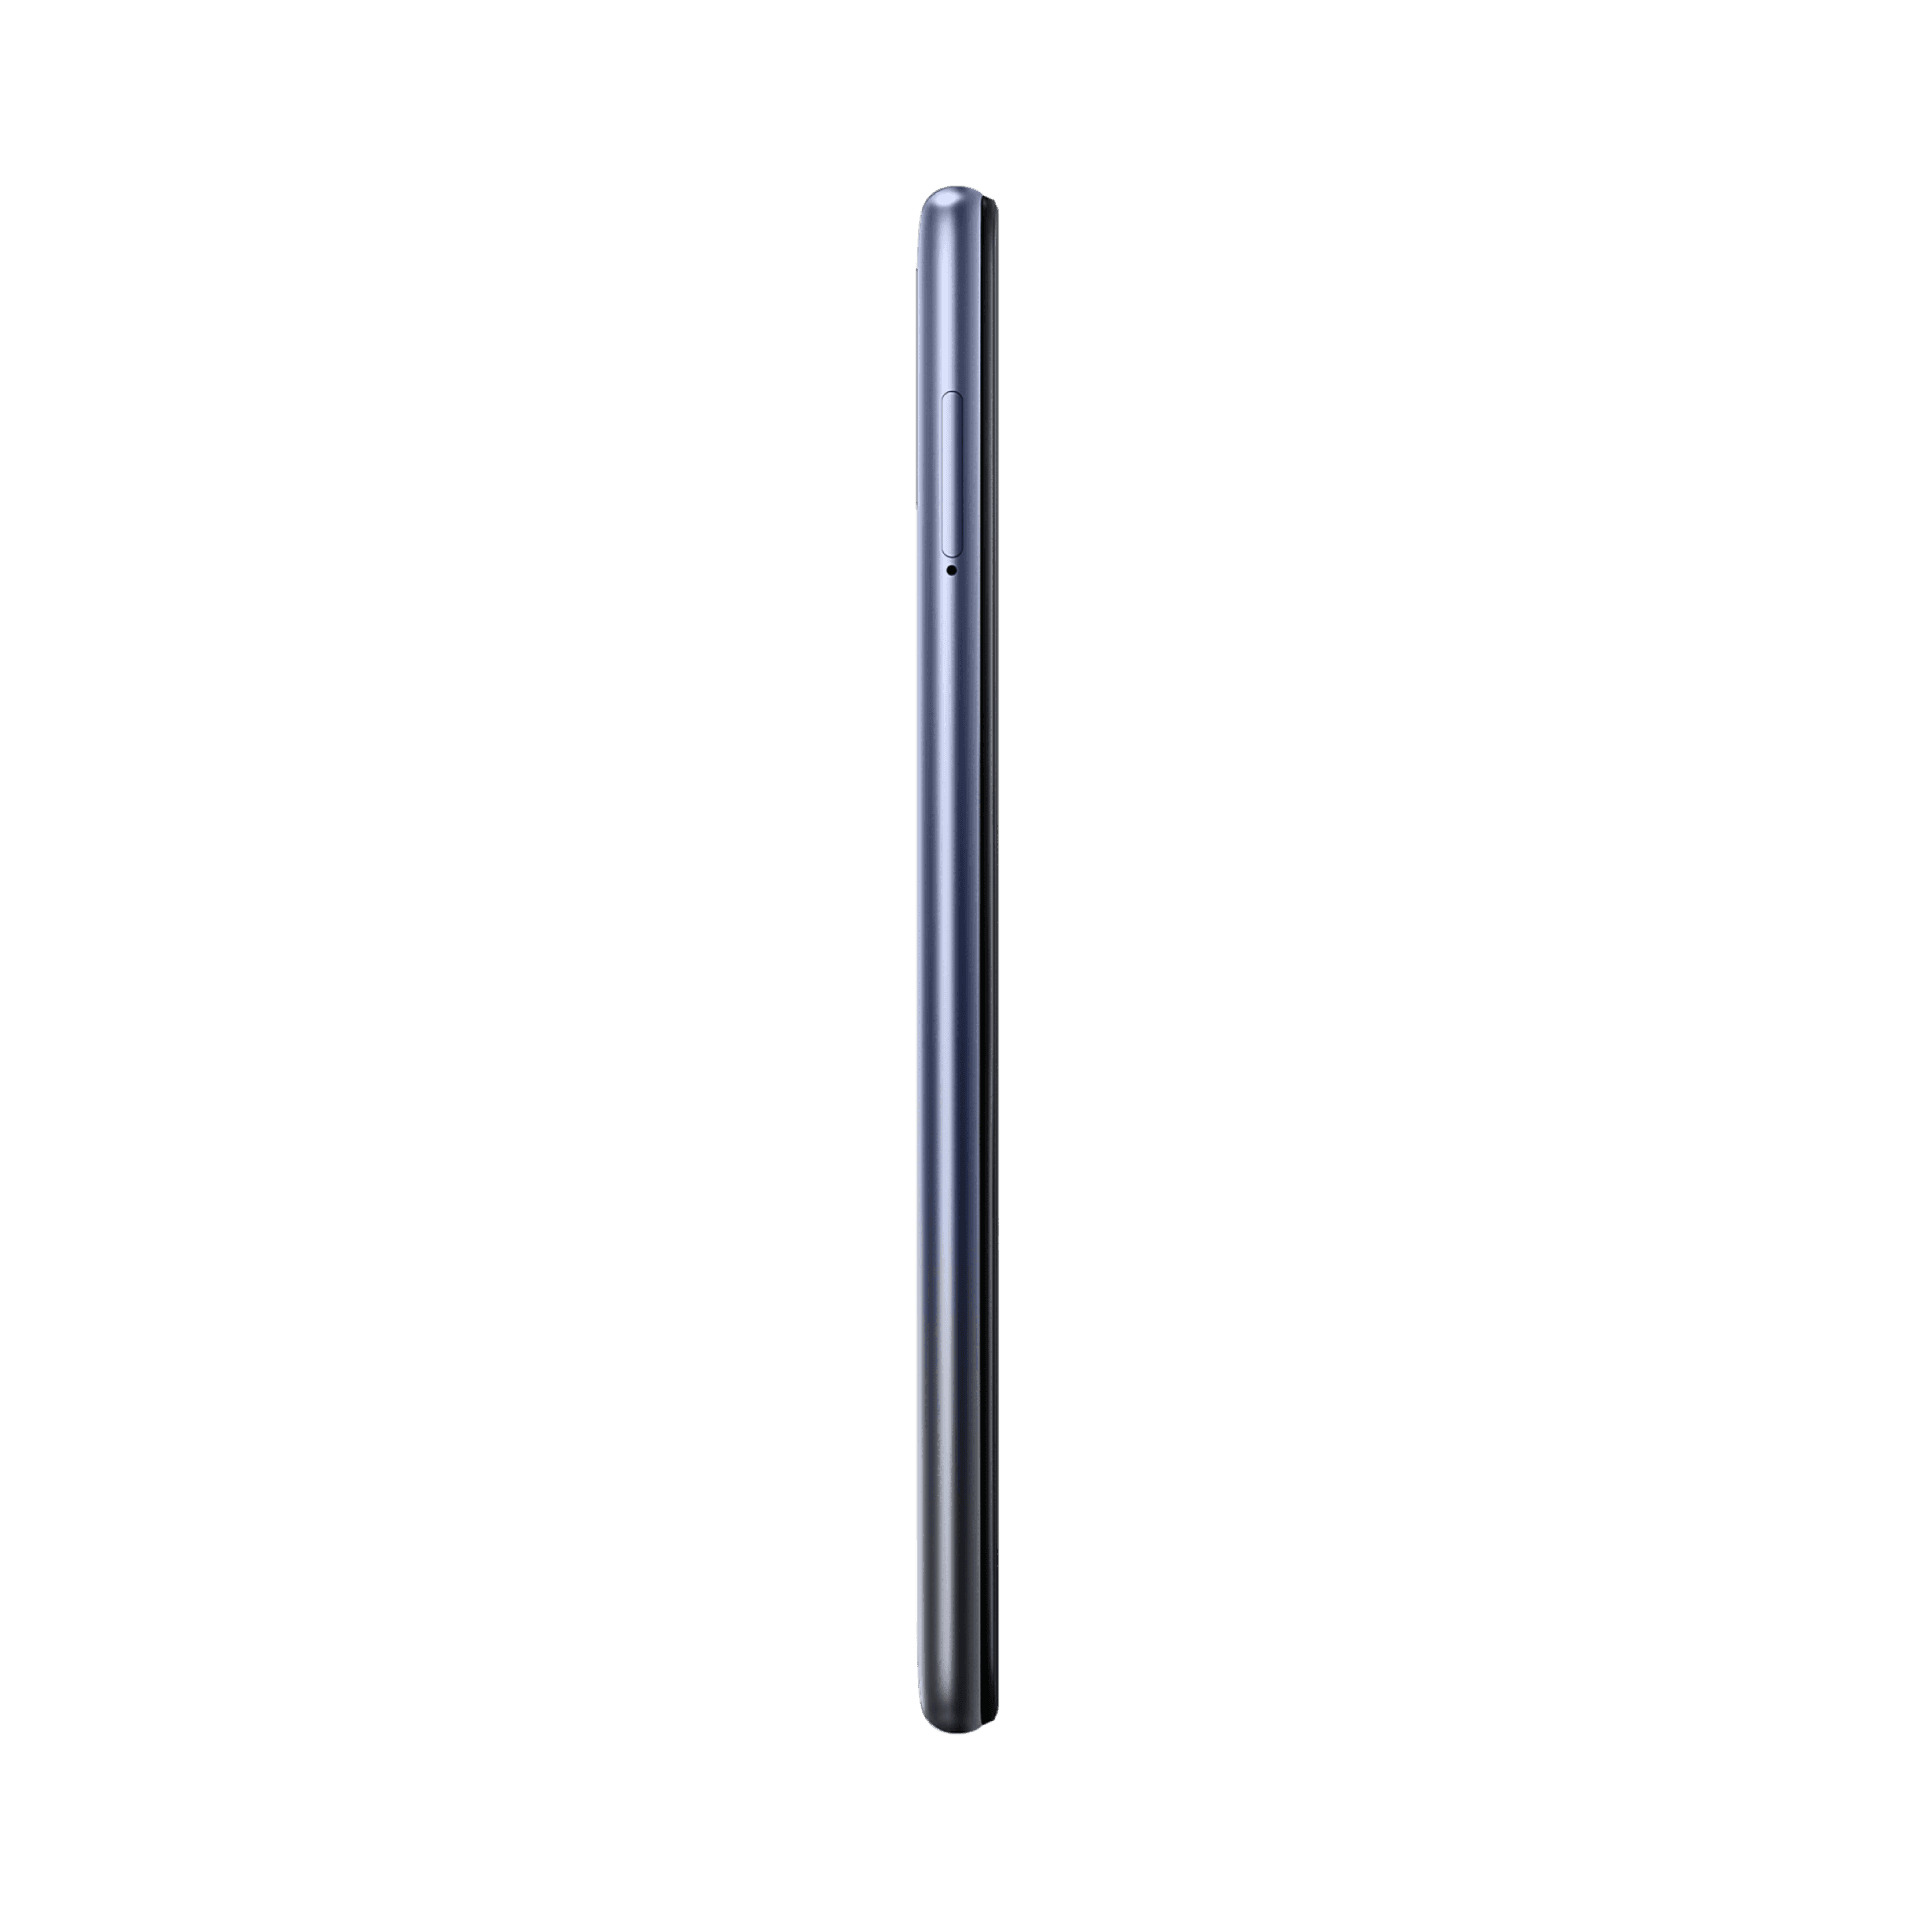 Samsung Galaxy M30 - 64 GB - Derecelendirme Mavi